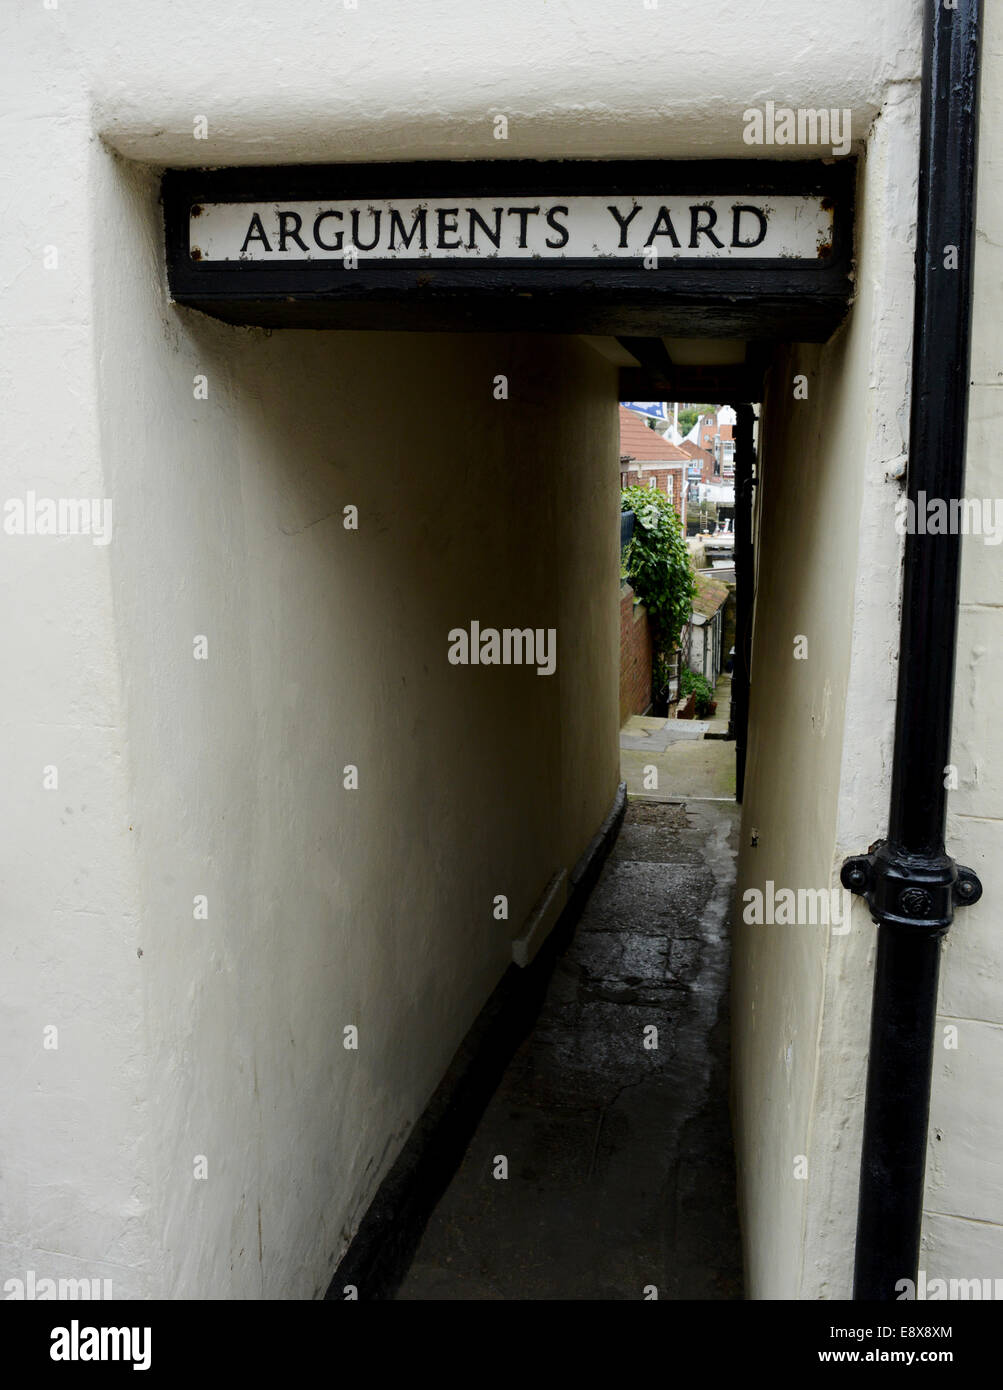 Arguments Yard - Whitby Stock Photo